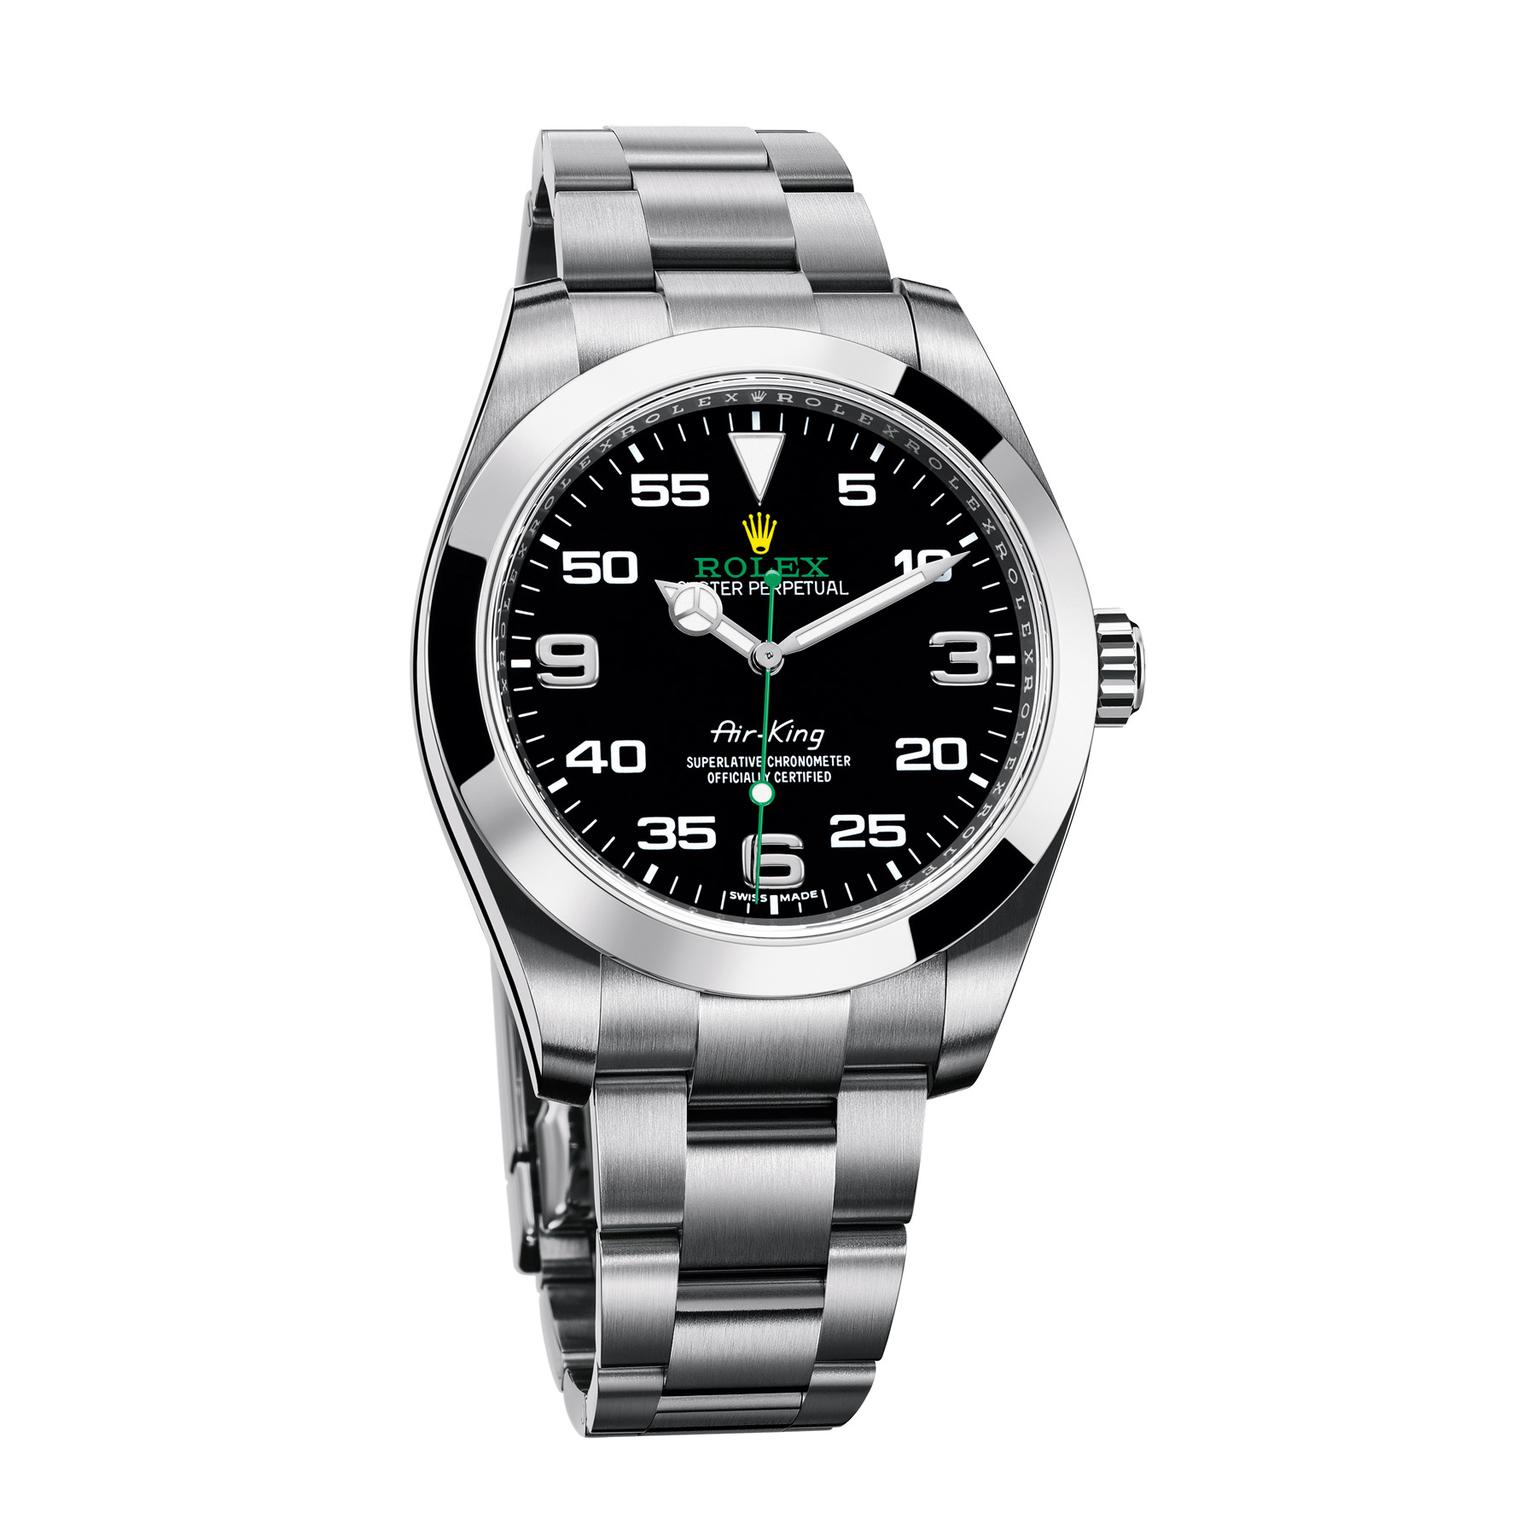 Rolex Air-King watch